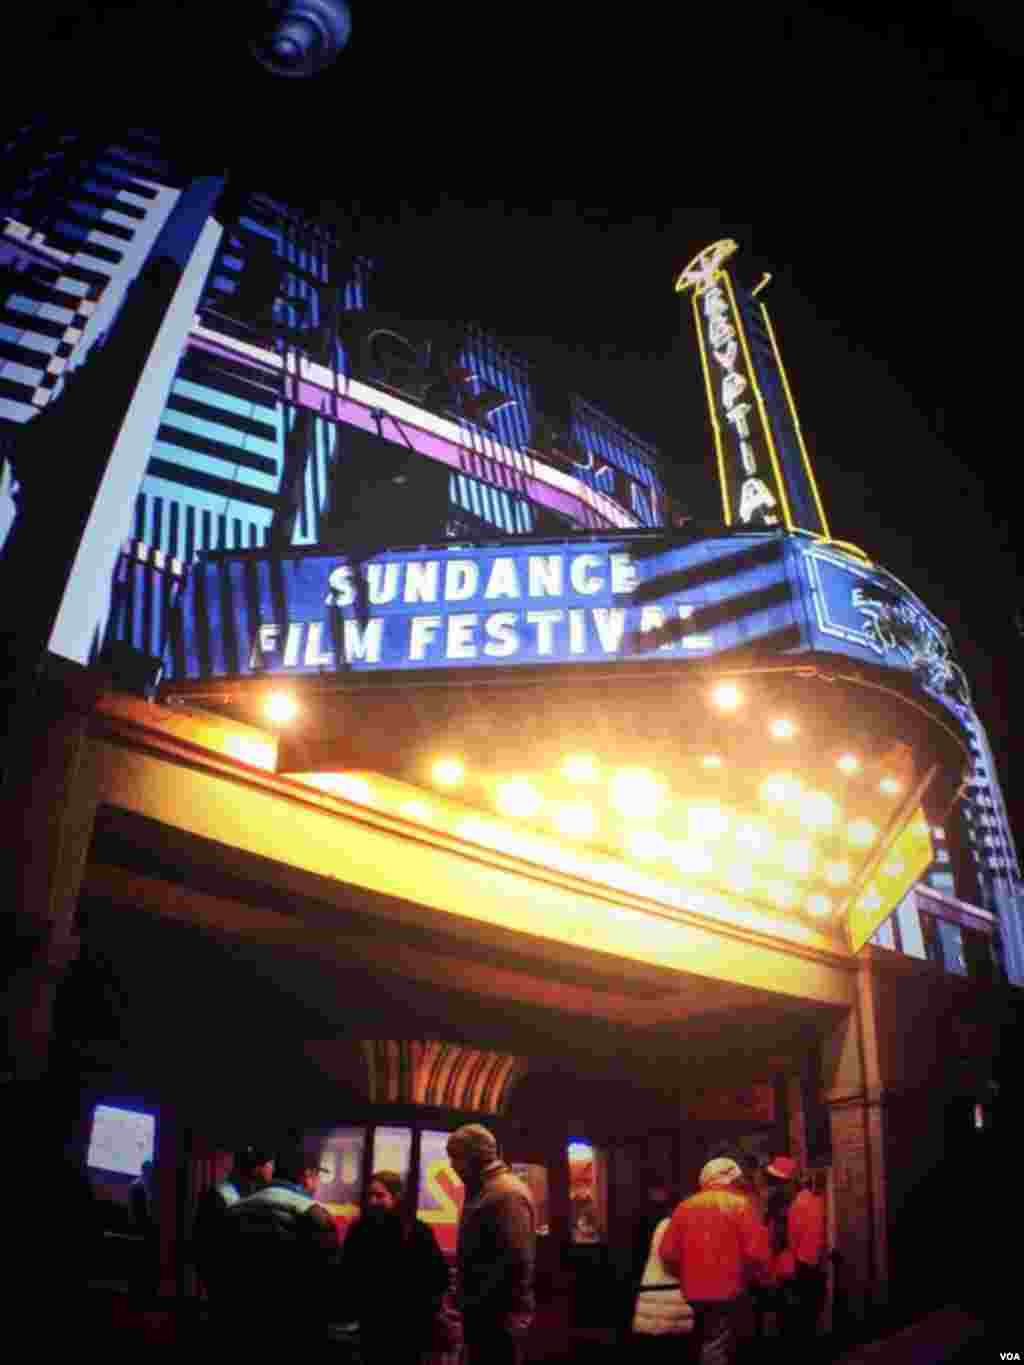 Egyptian Theatre di Park City, Utah, tempat pemutaran perdana film kolaborasi Indonesia-Jepang 'Killers' di Festival Film Sundance 2014. (VOA/Vena Annisa)